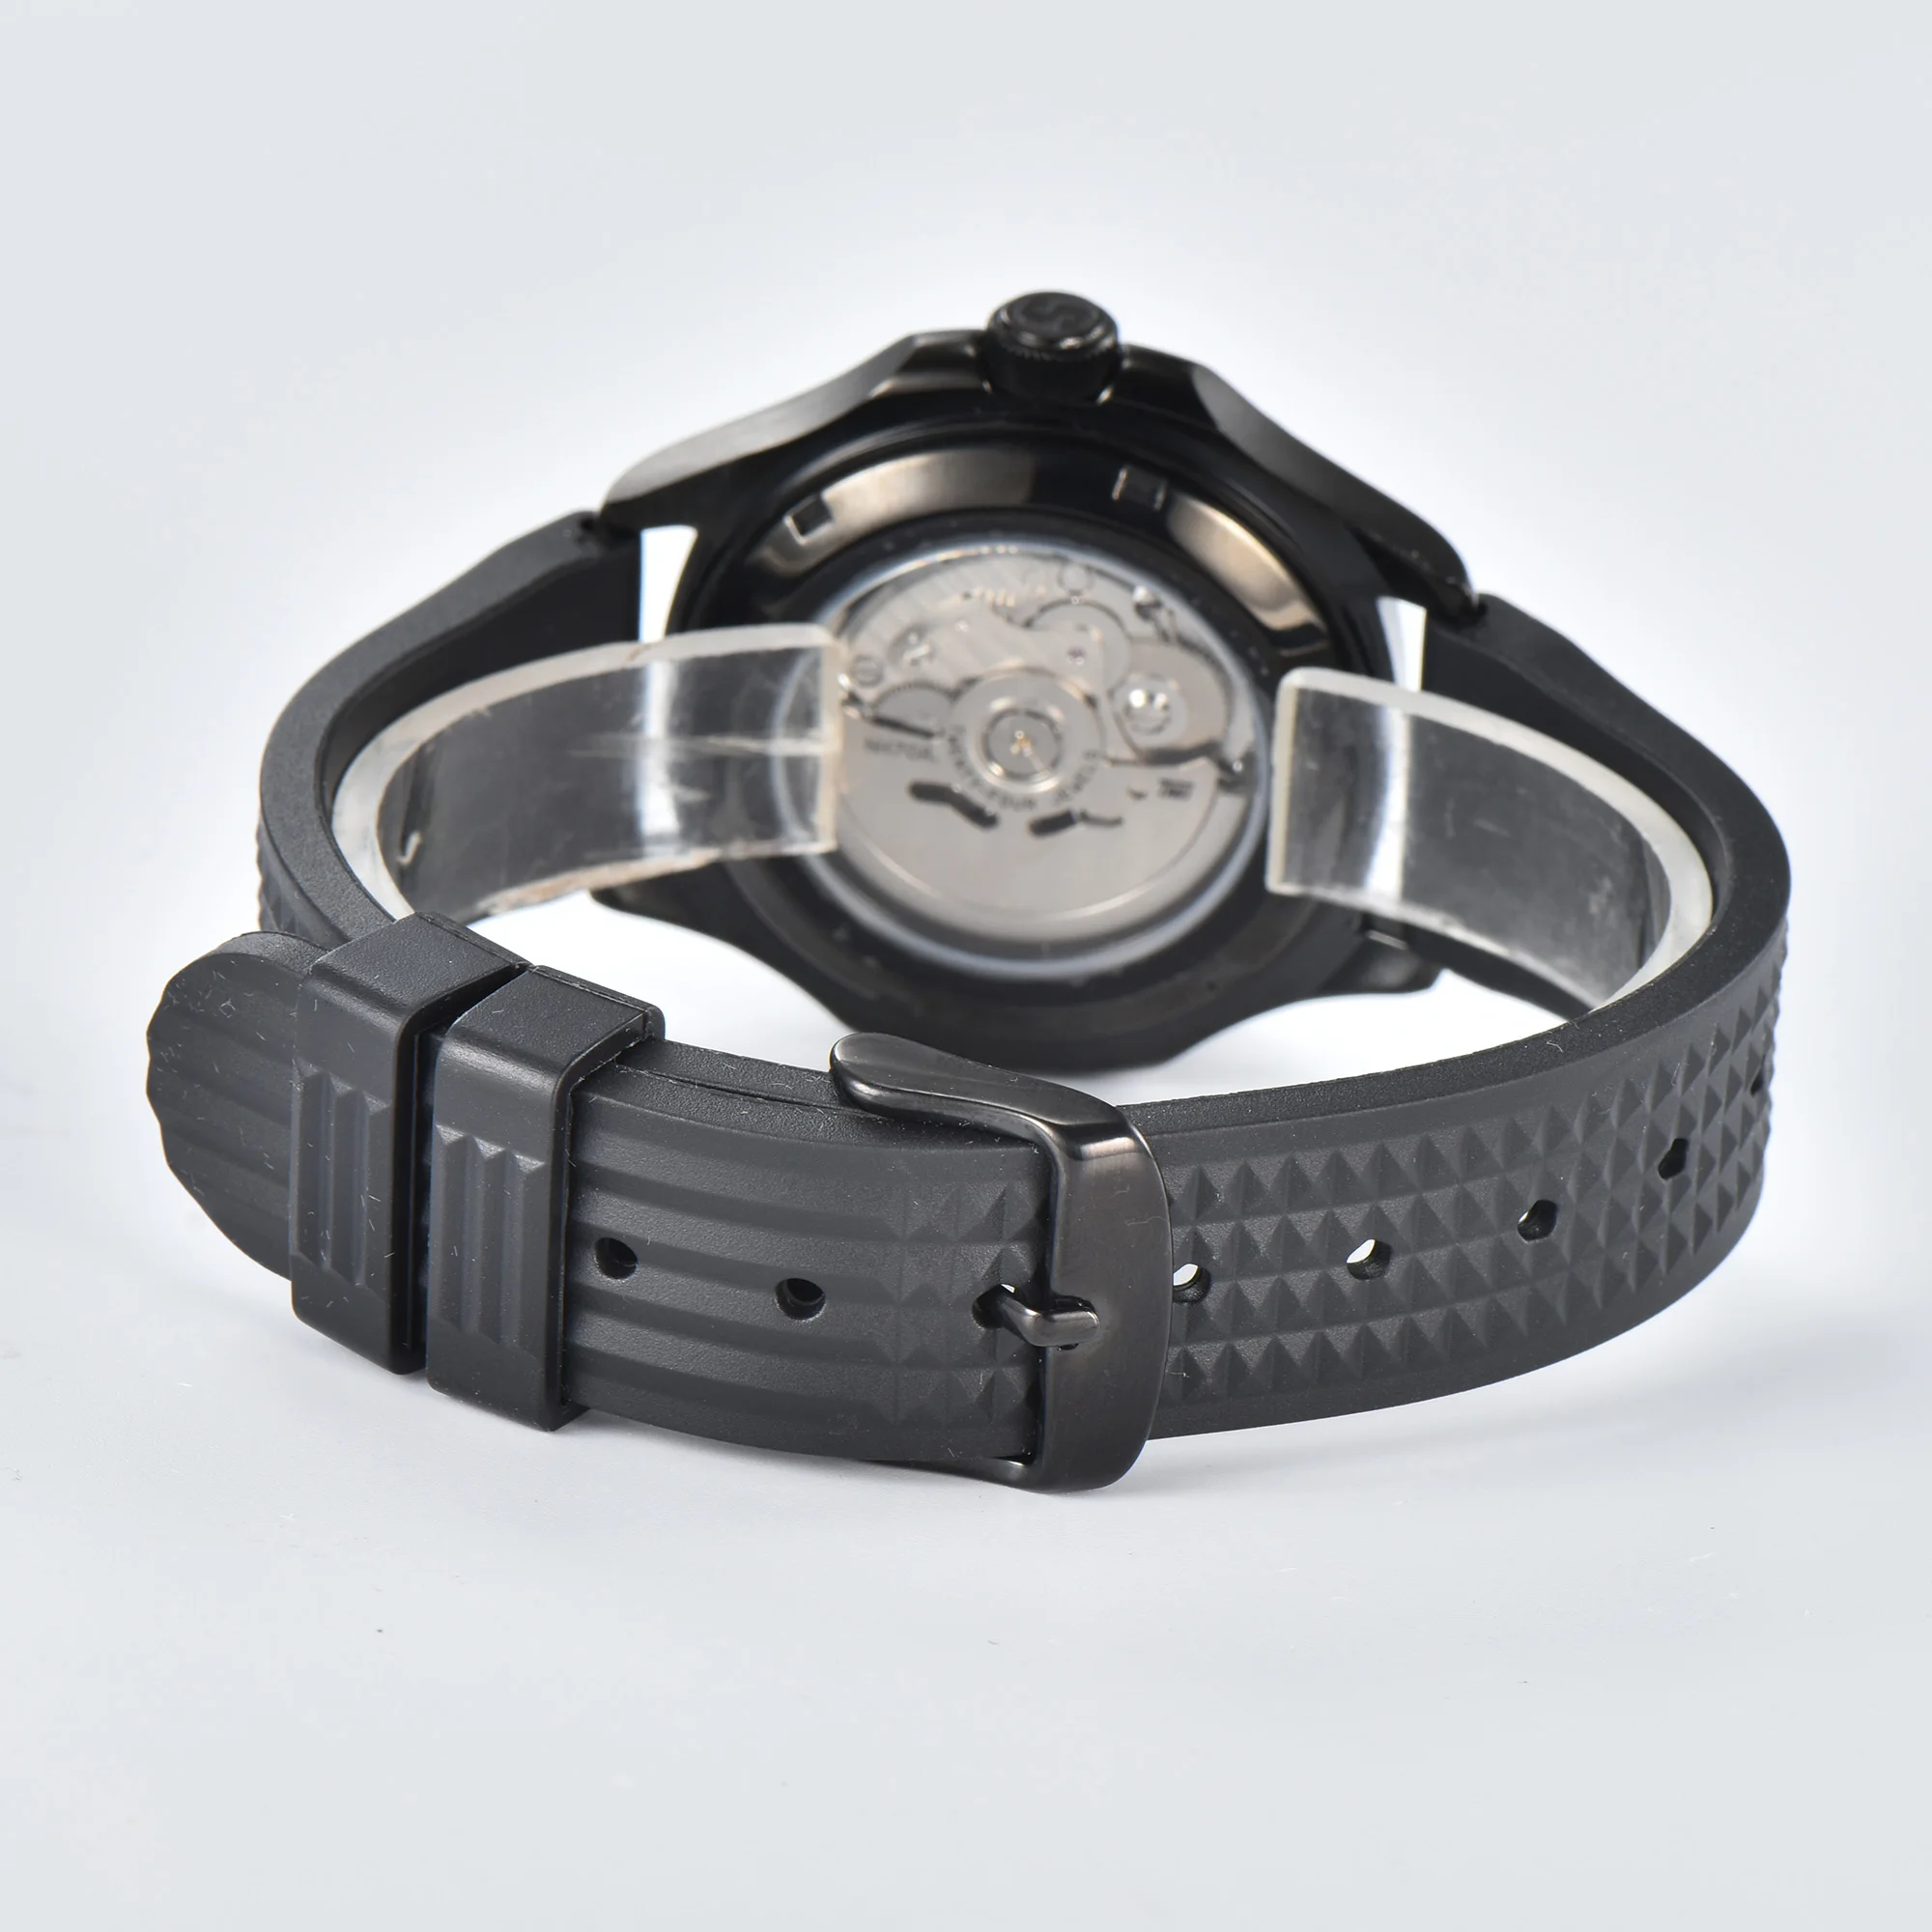 NH38 Movement Automatic Mechanical Creativity Customizable Luxury Watch Sapphire Crystal NH38 Watch Men's Watch